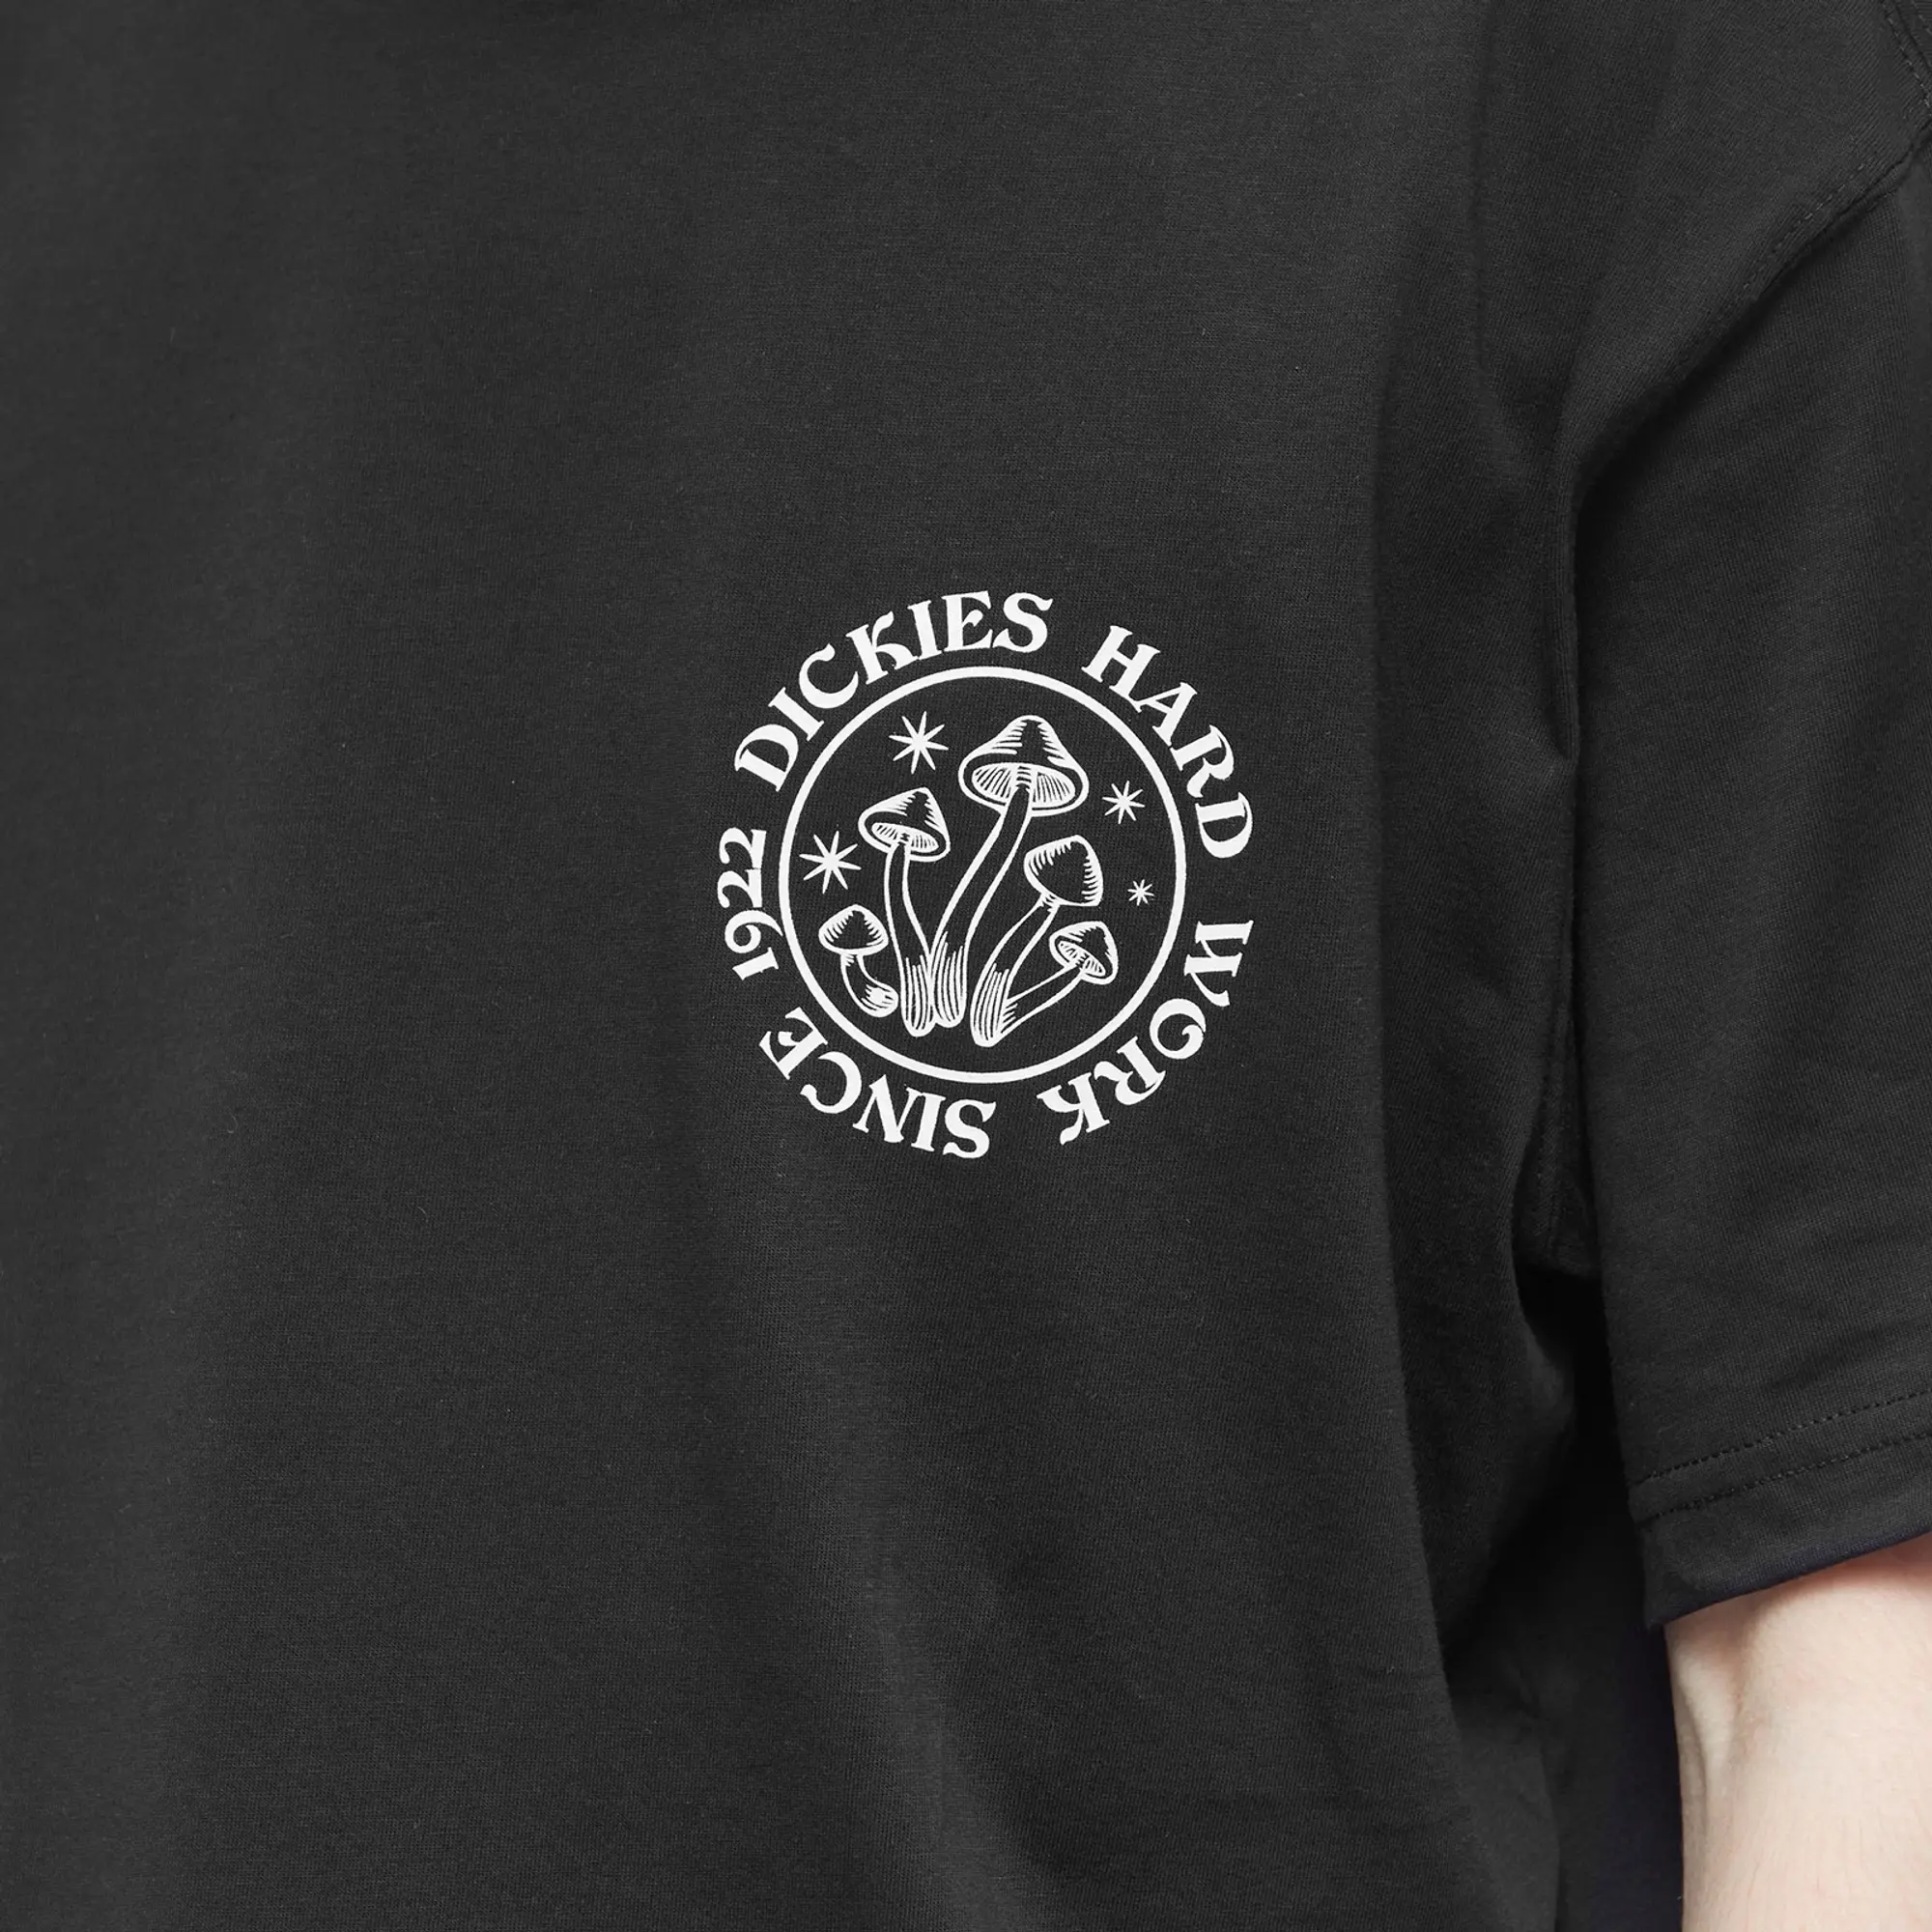 Dickies Men's Bayside Gardens T-Shirt Black